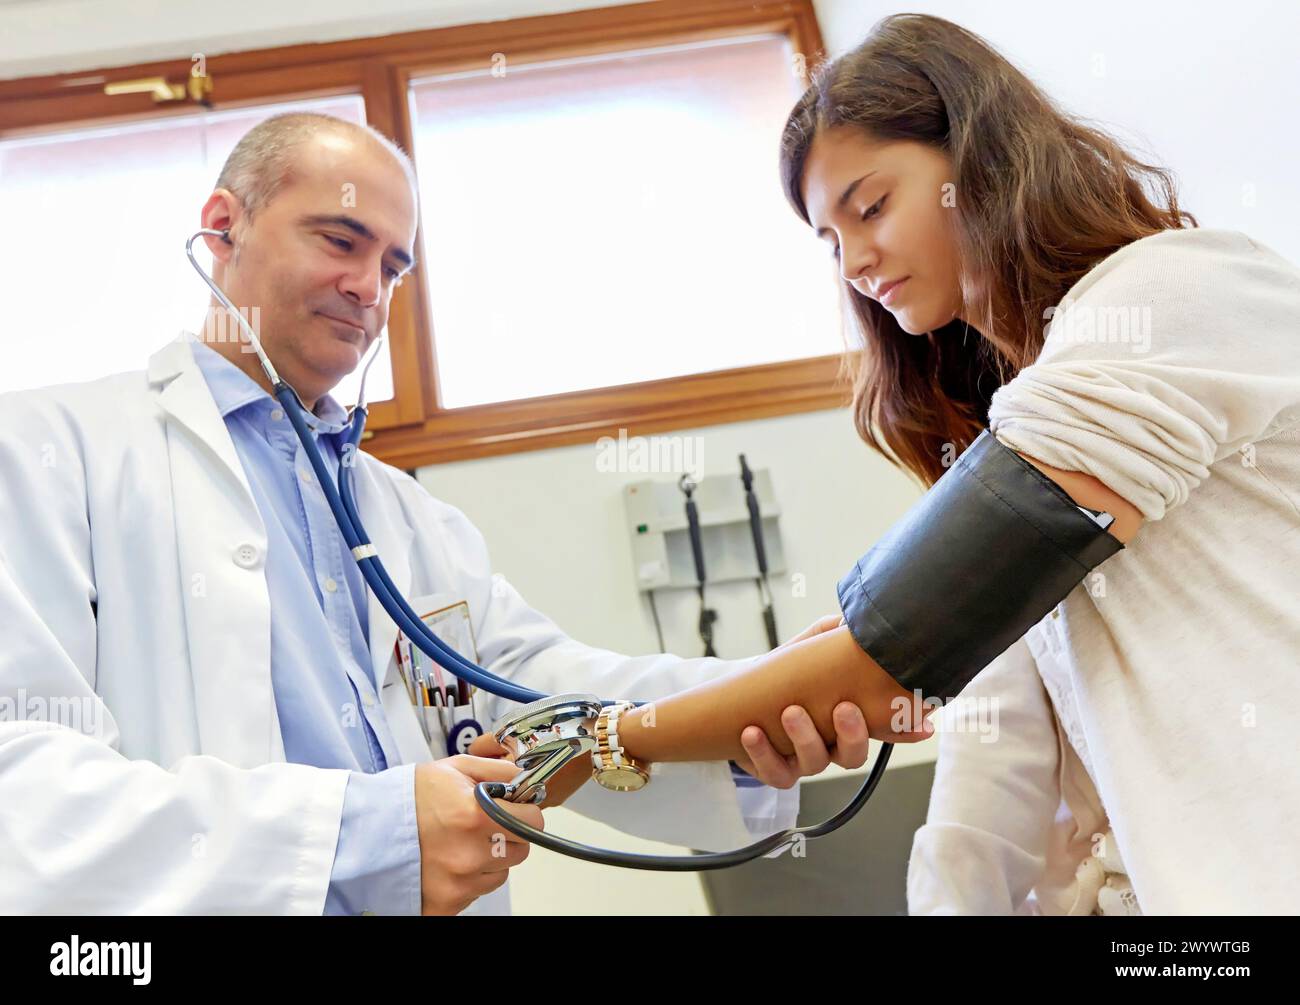 Taking blood pressure, Medical consultation, Ambulatory Lezo, Gipuzkoa, Basque Country, Spain. Stock Photo